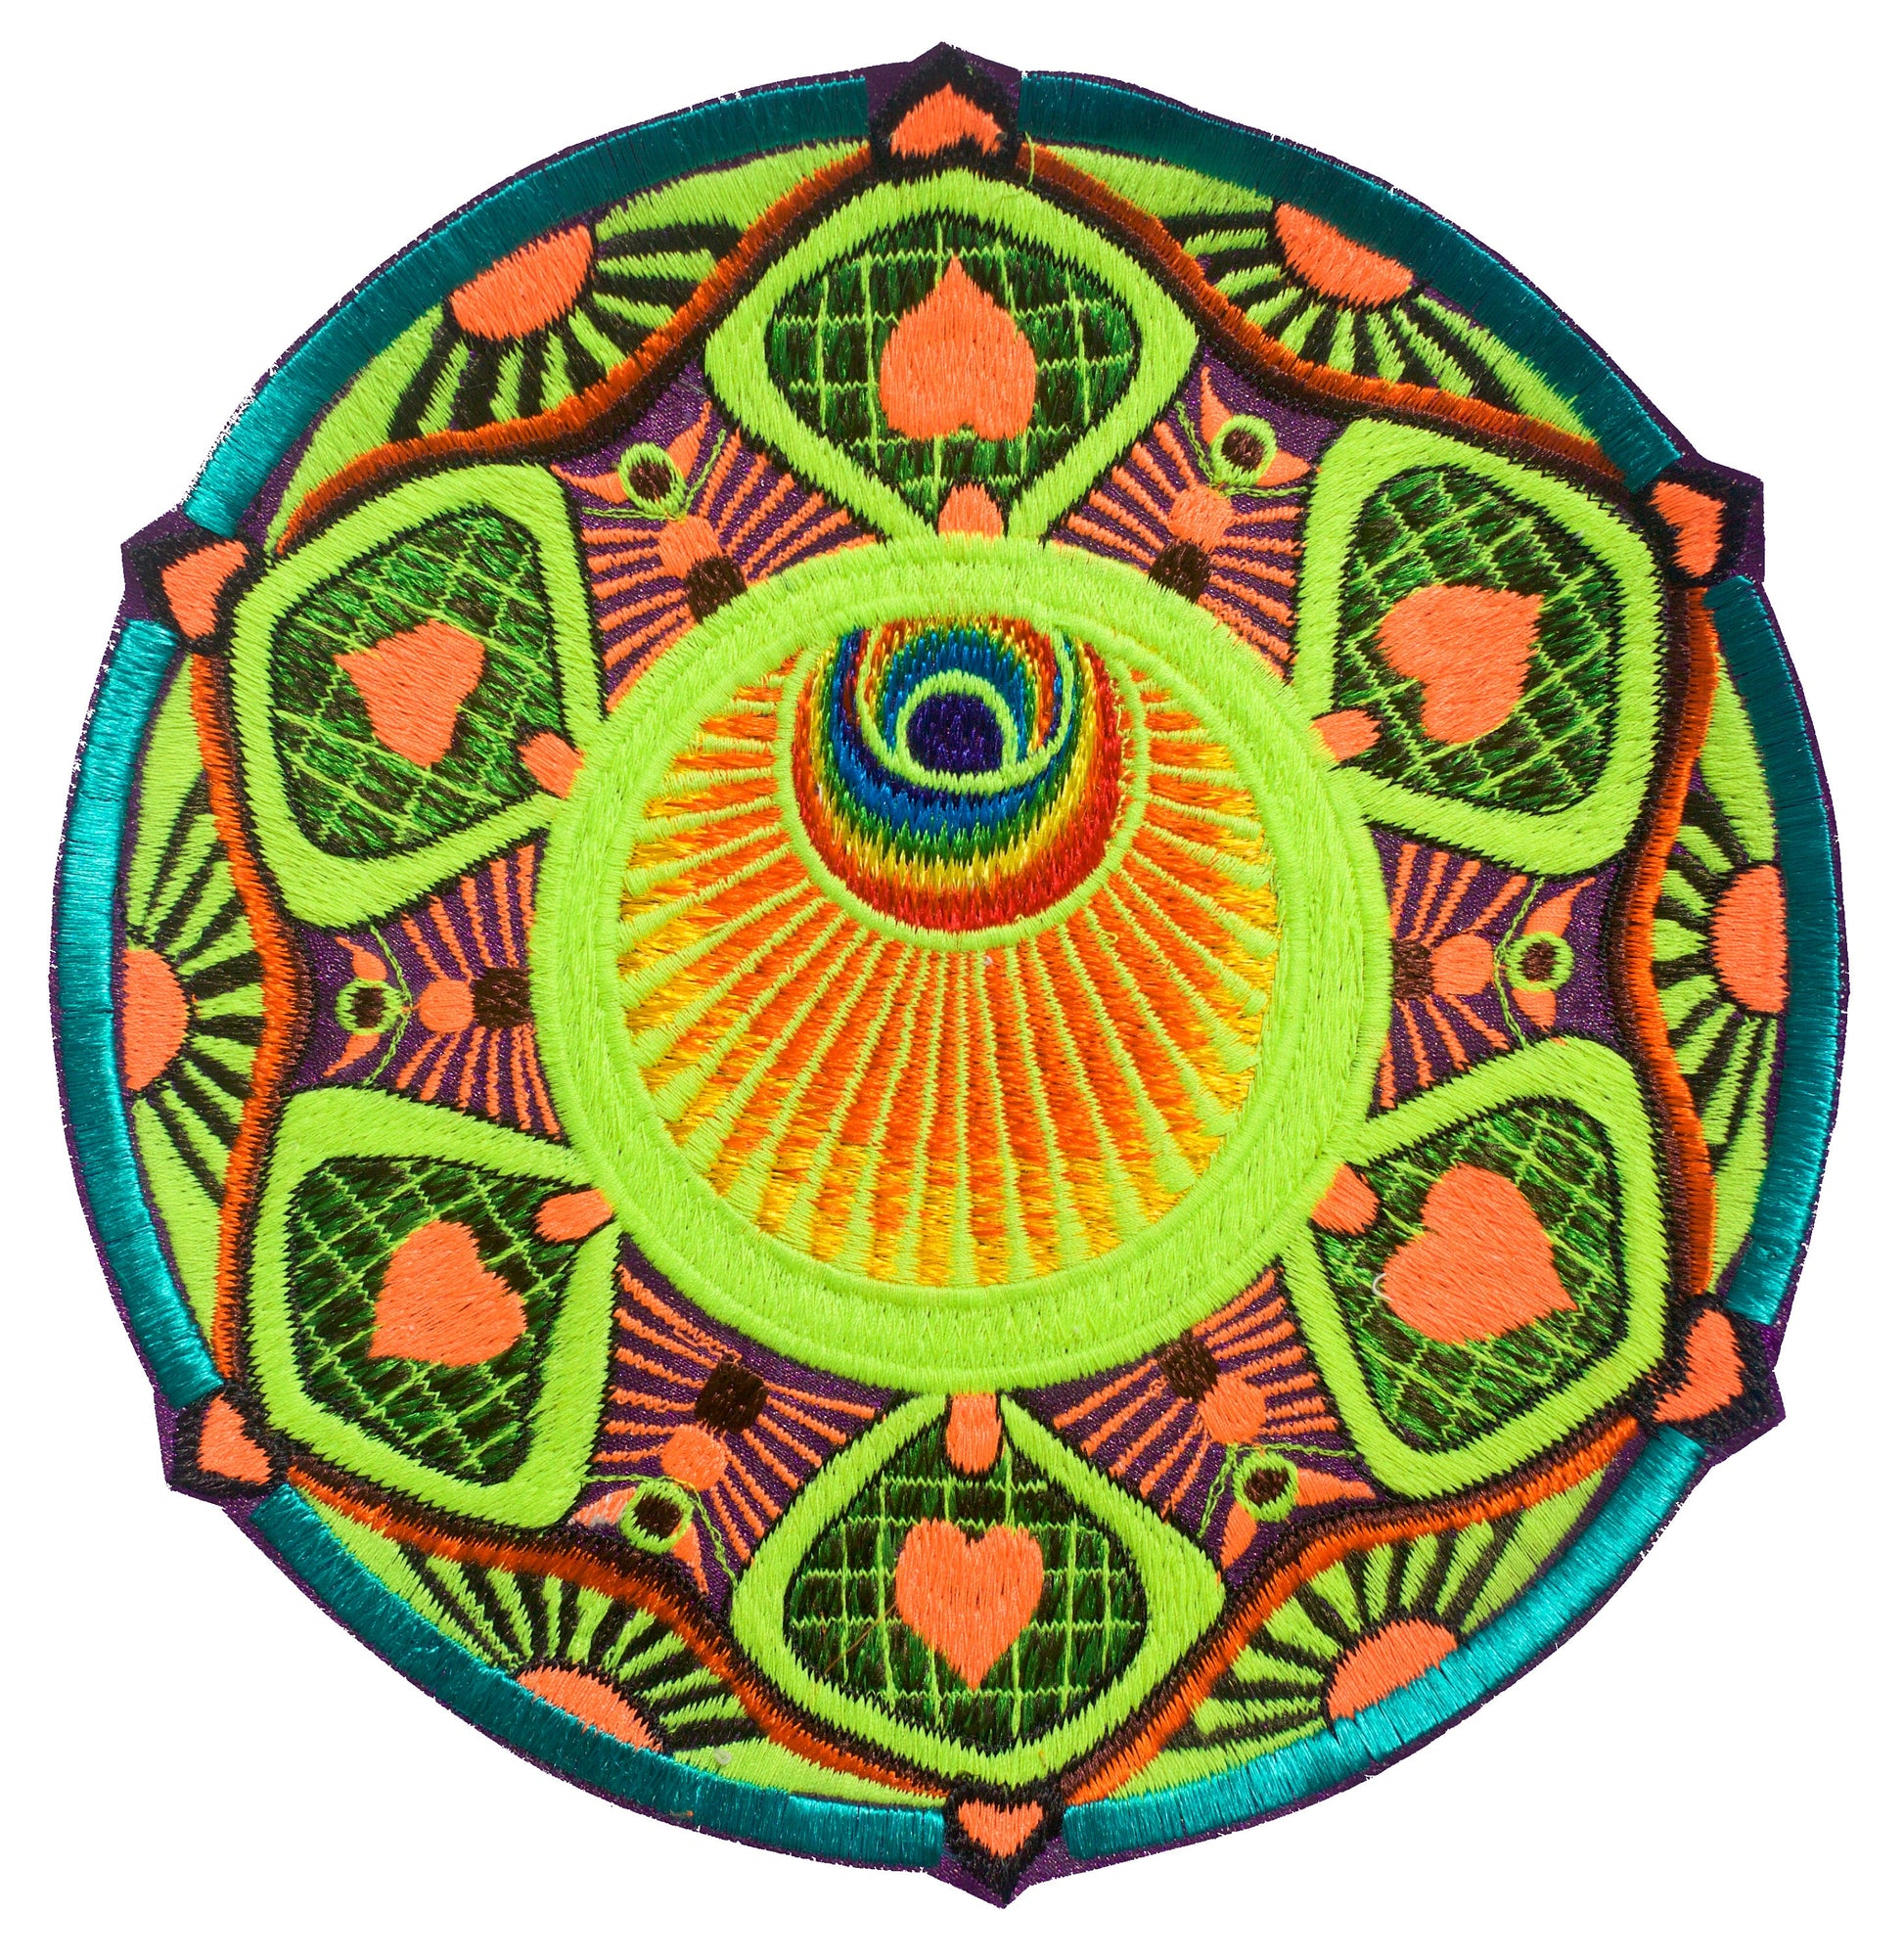 The Sunrise Angel crop circle mandala rainbow fractal ufo mystery sacred geometry protection spirit blacklight glowing psychedelic art